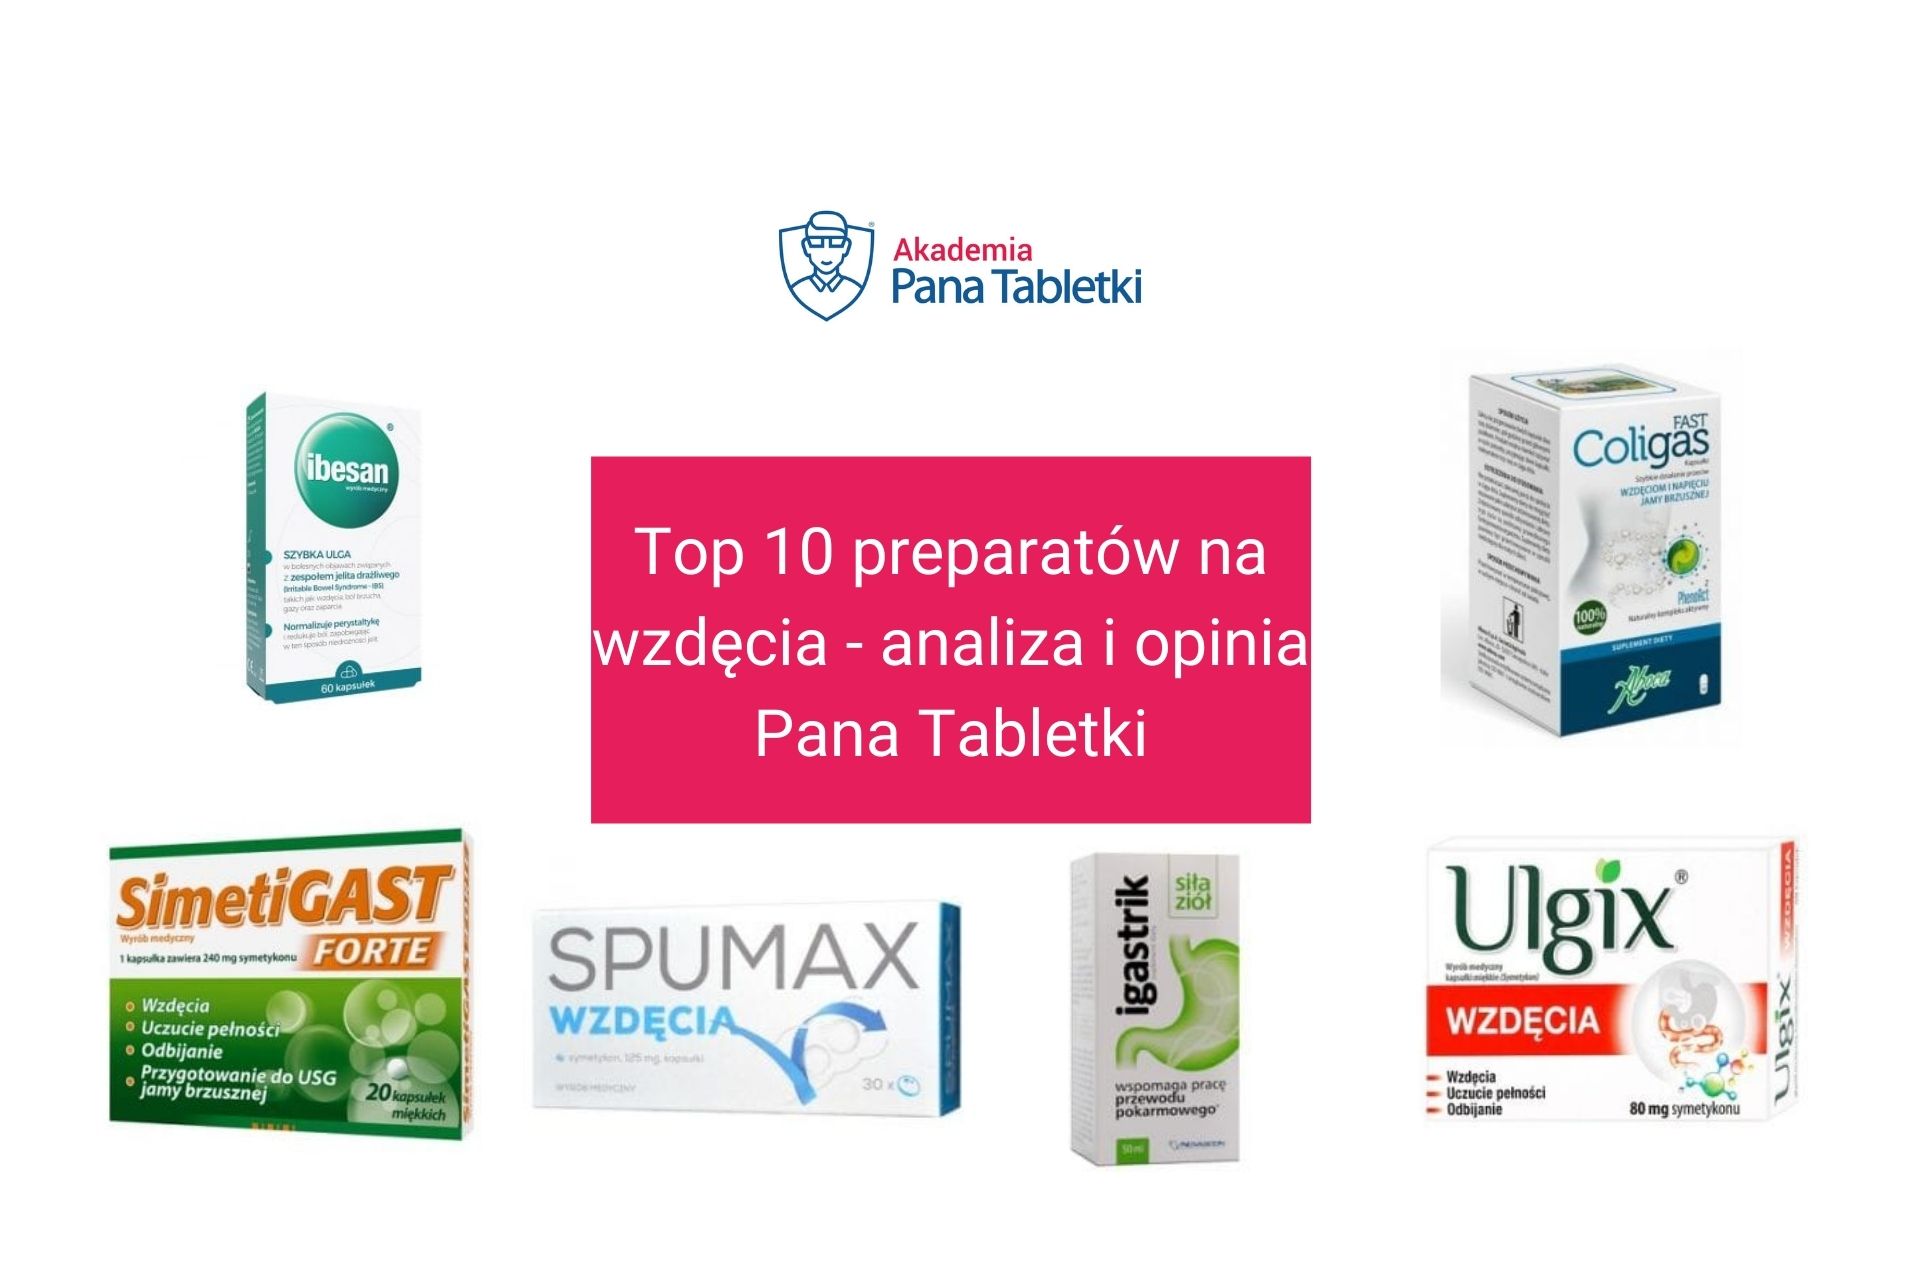 top 10 preparatów na wzdęcia opinia pan tabletka